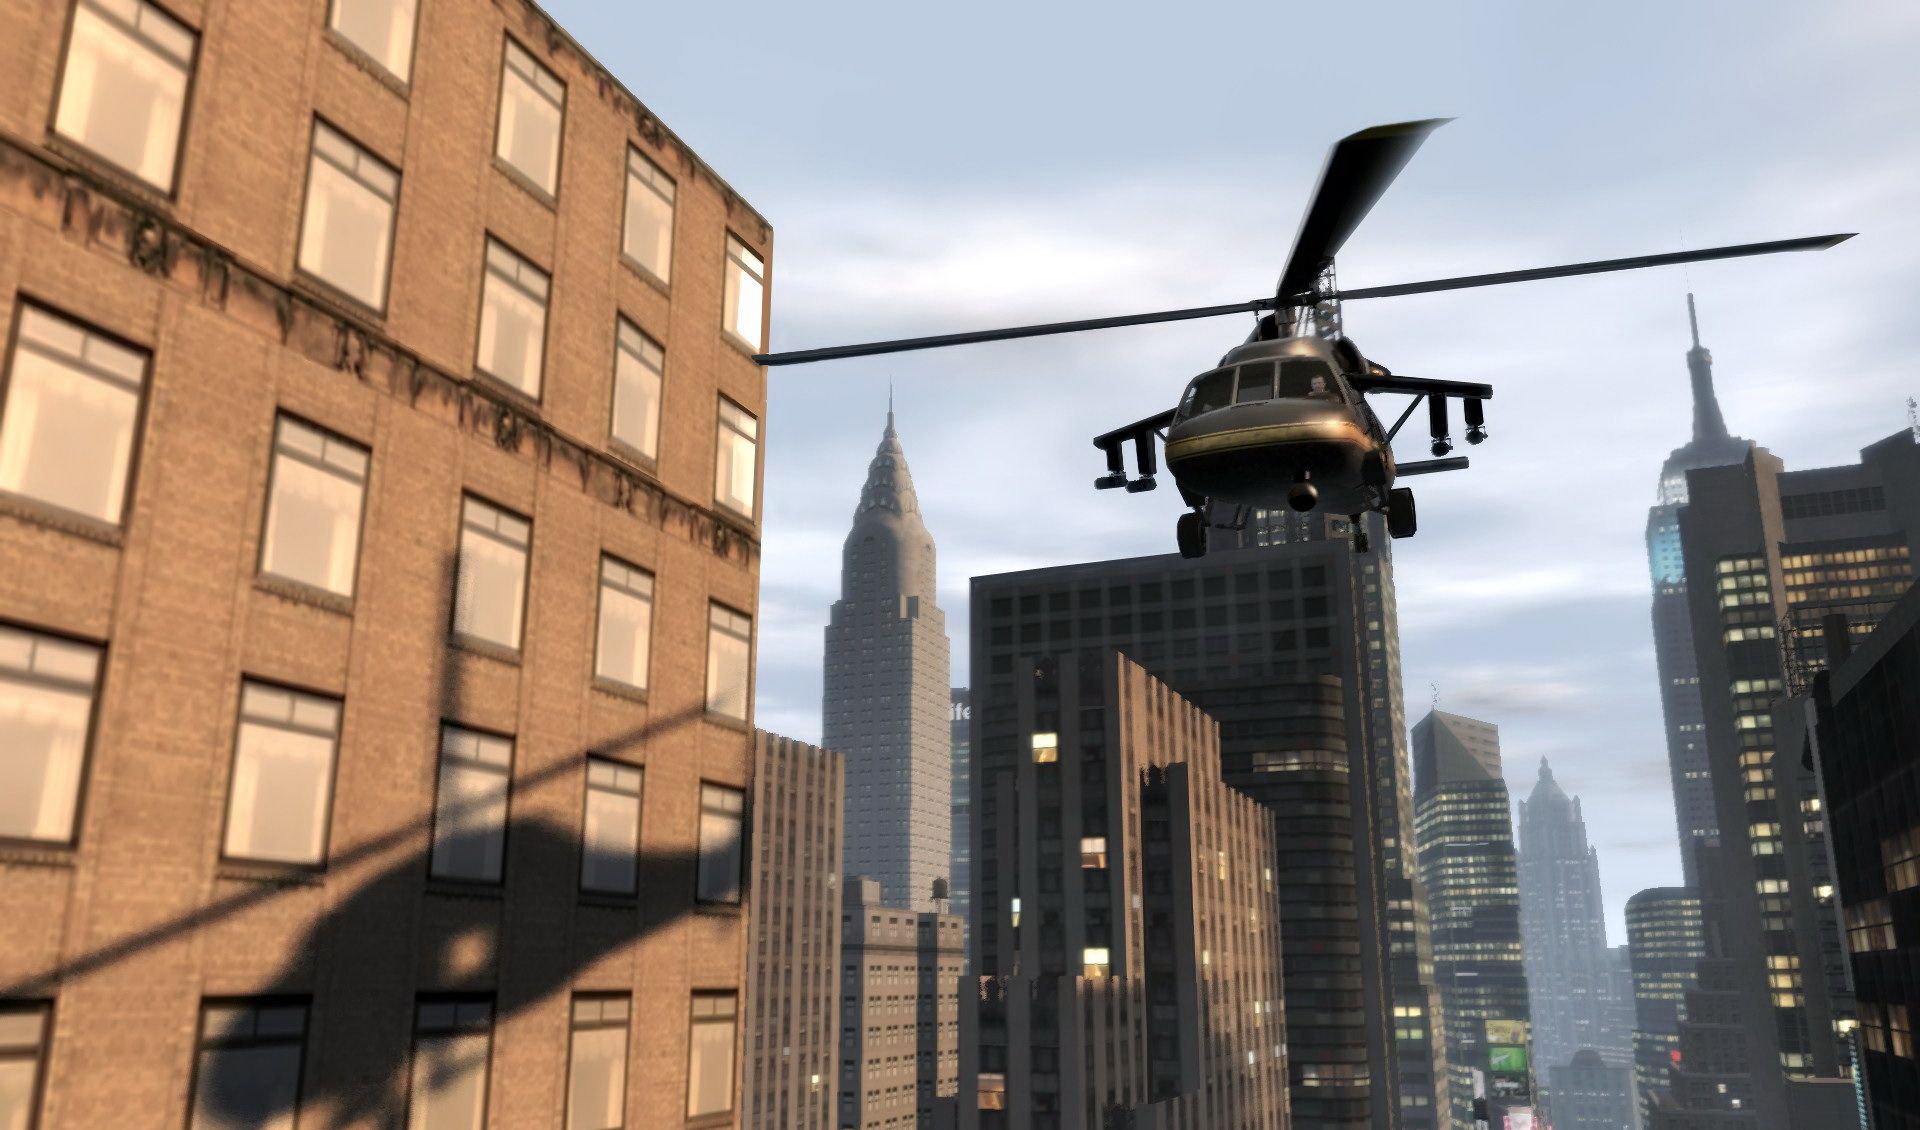 Grand Theft Auto IV - Image 15